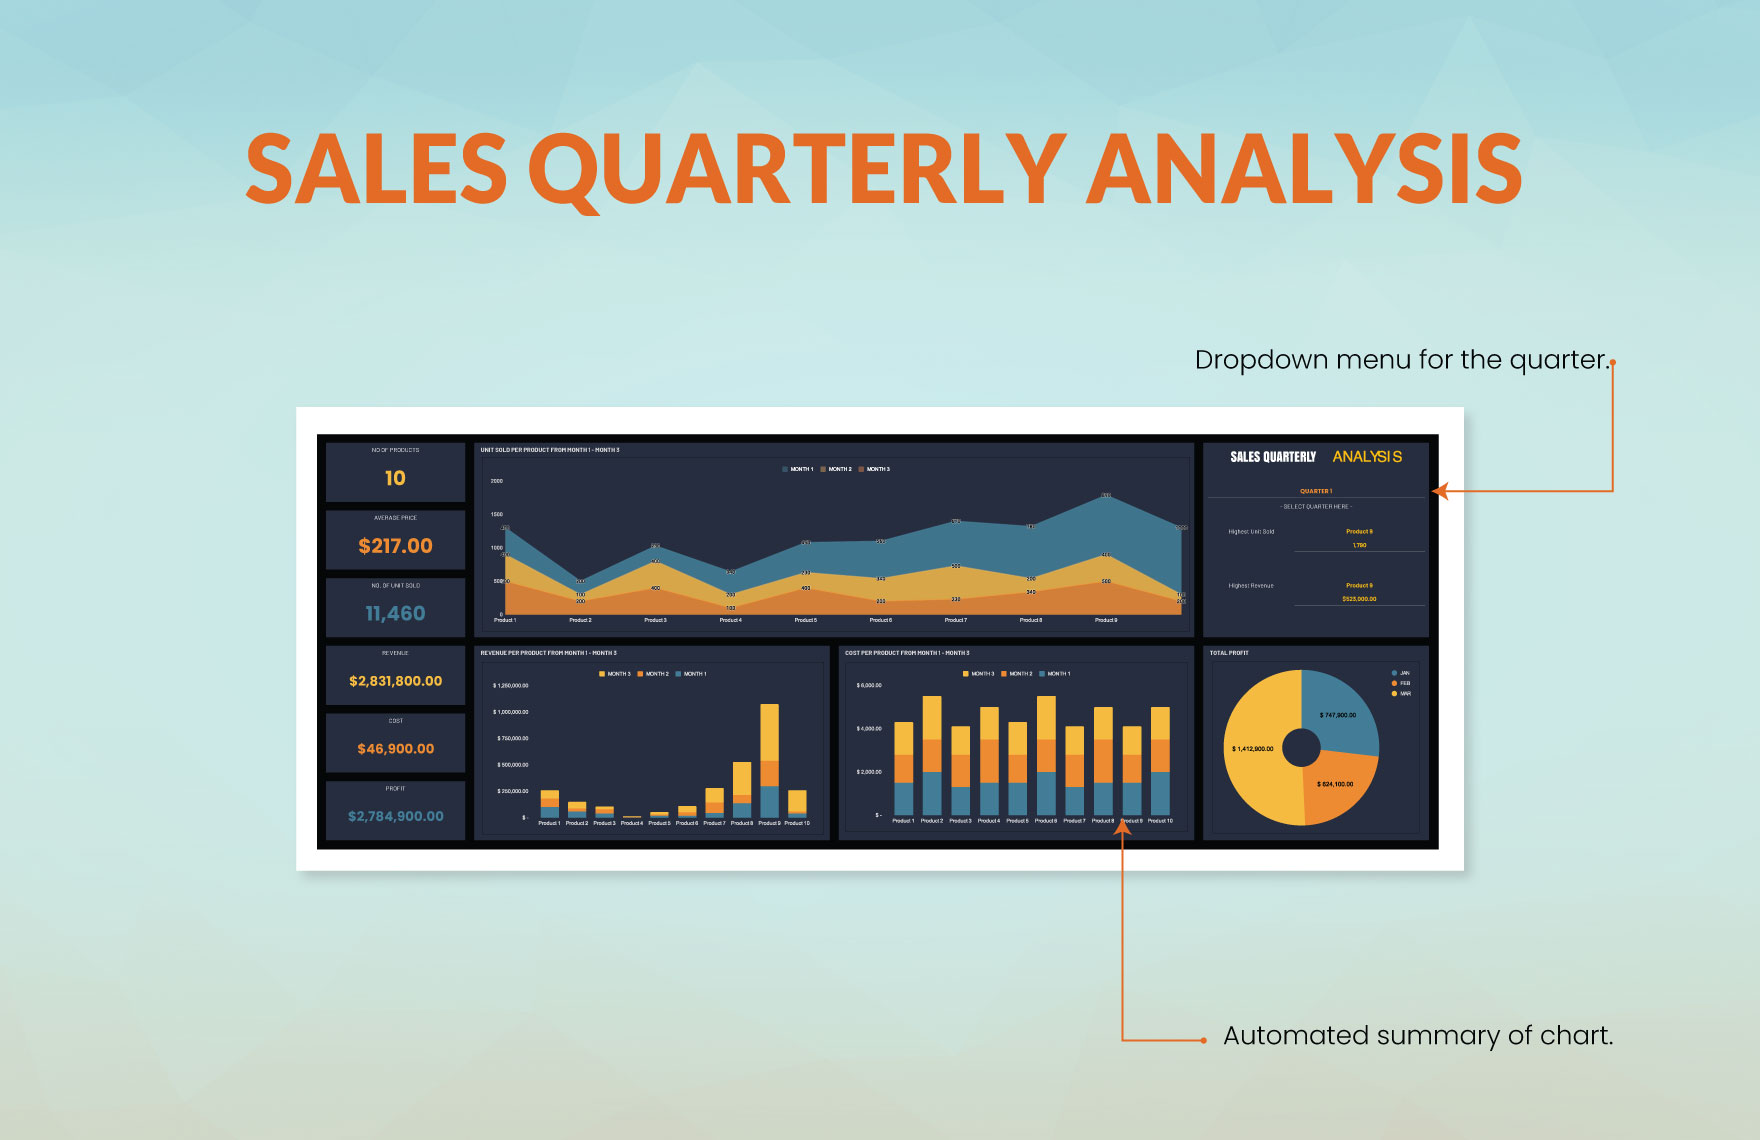 Sales Quarterly Analysis Template